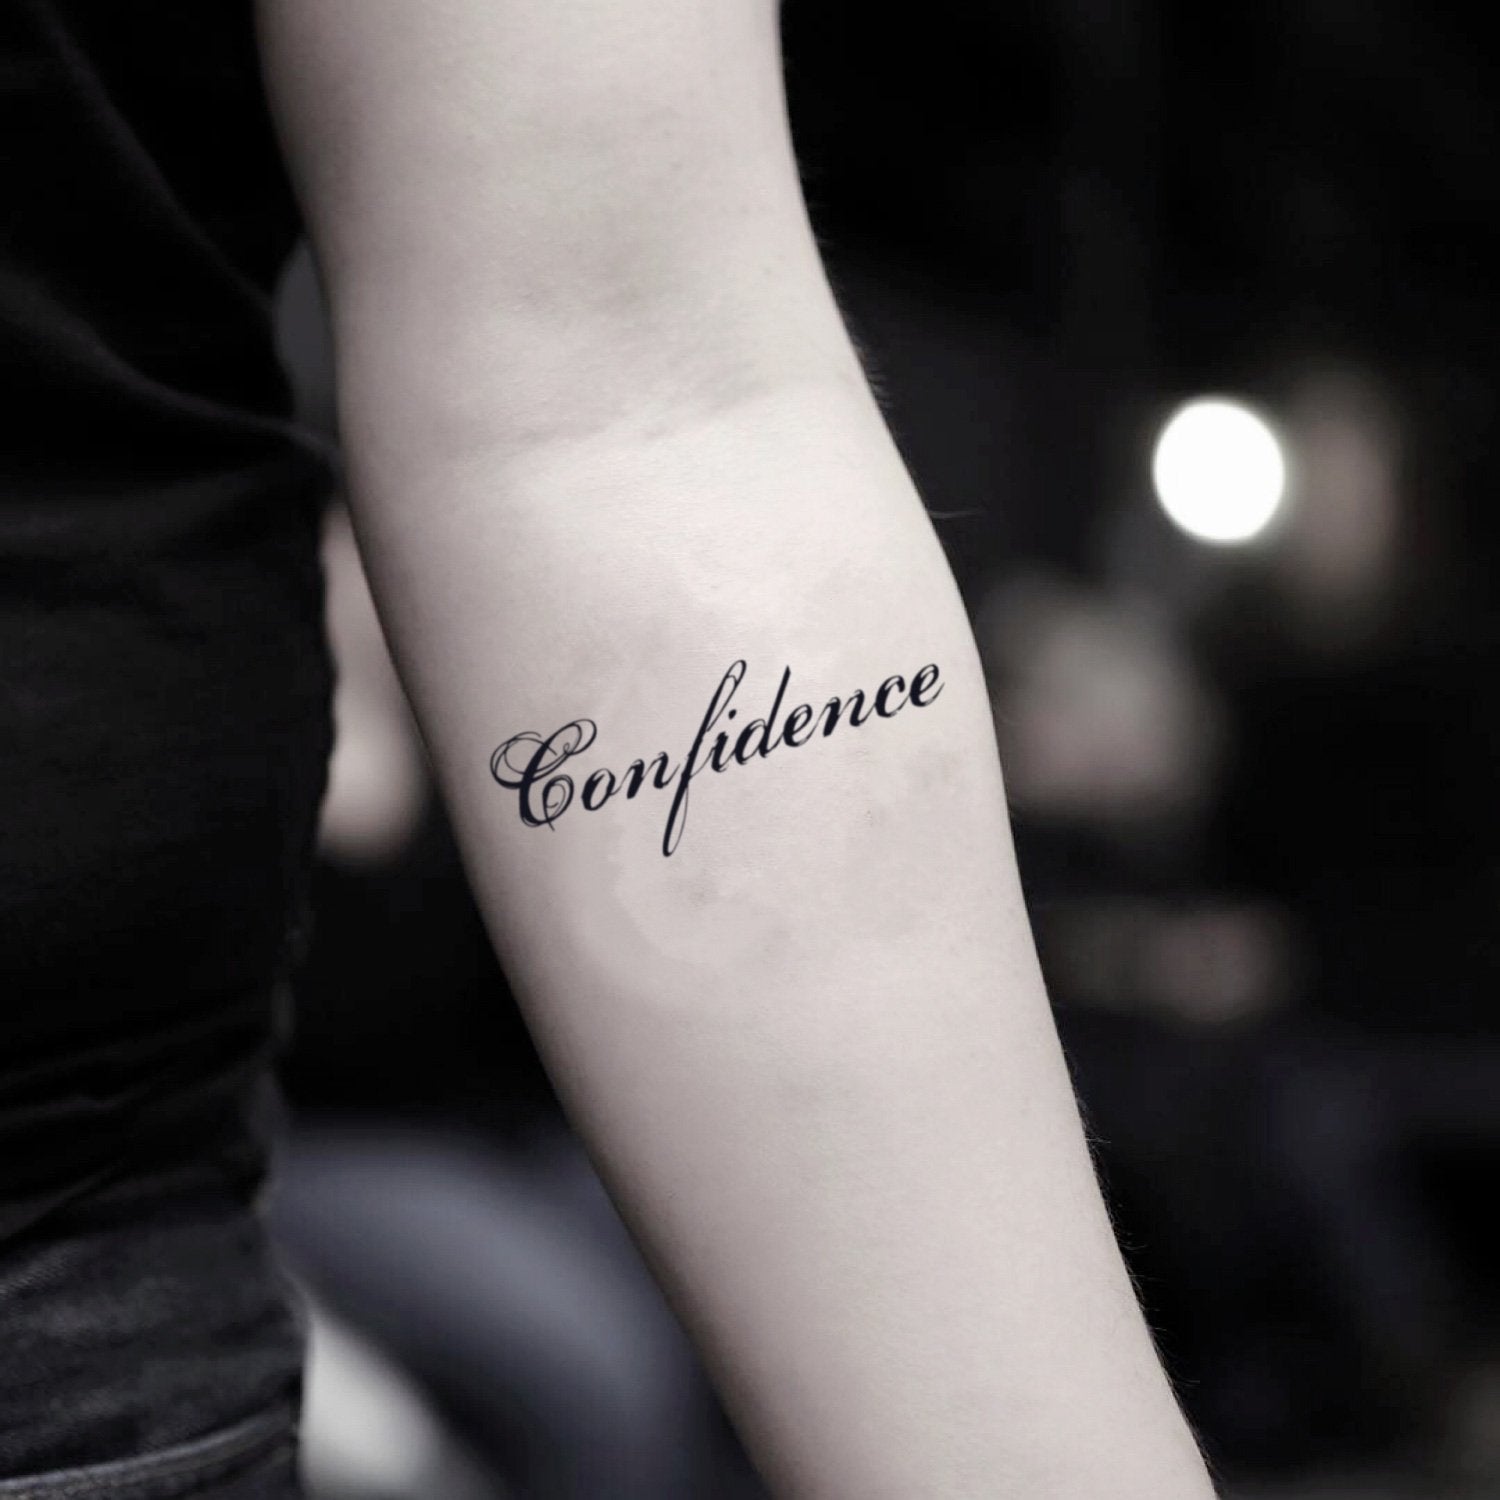 Confidence tattoo